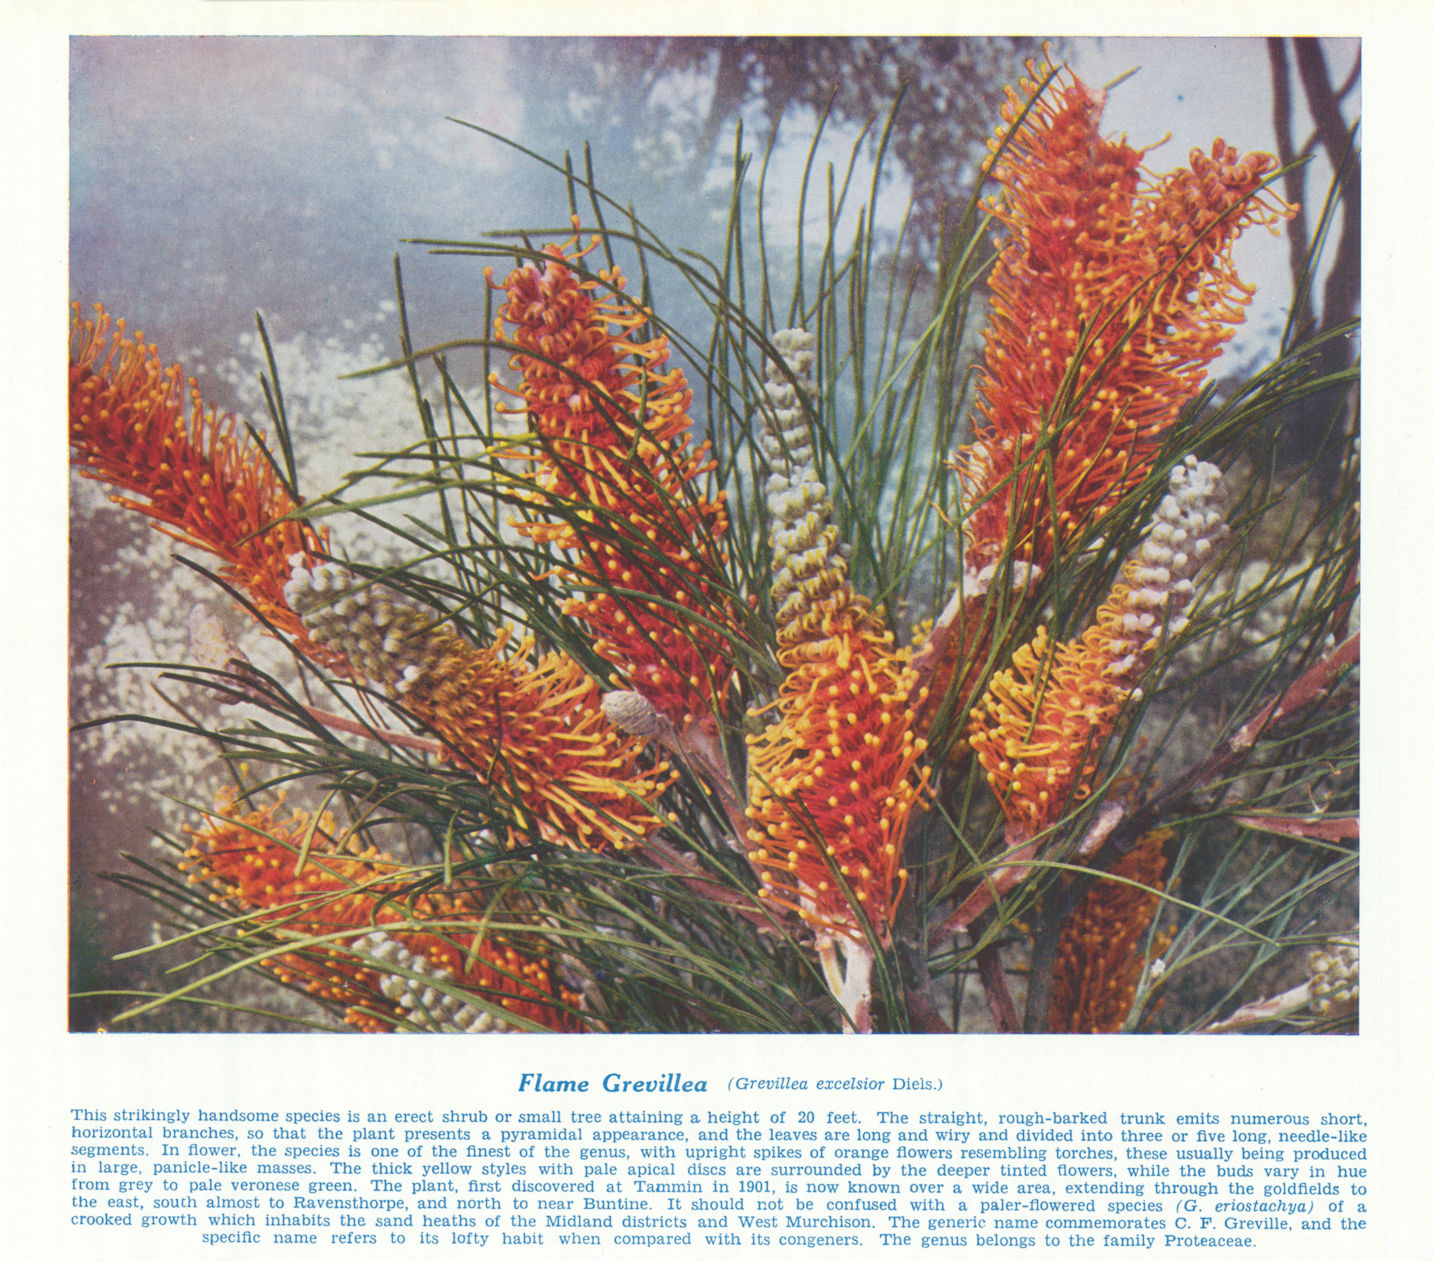 Flame Grevillea (Grevillea excelsior Diels). West Australian Wild Flowers 1950